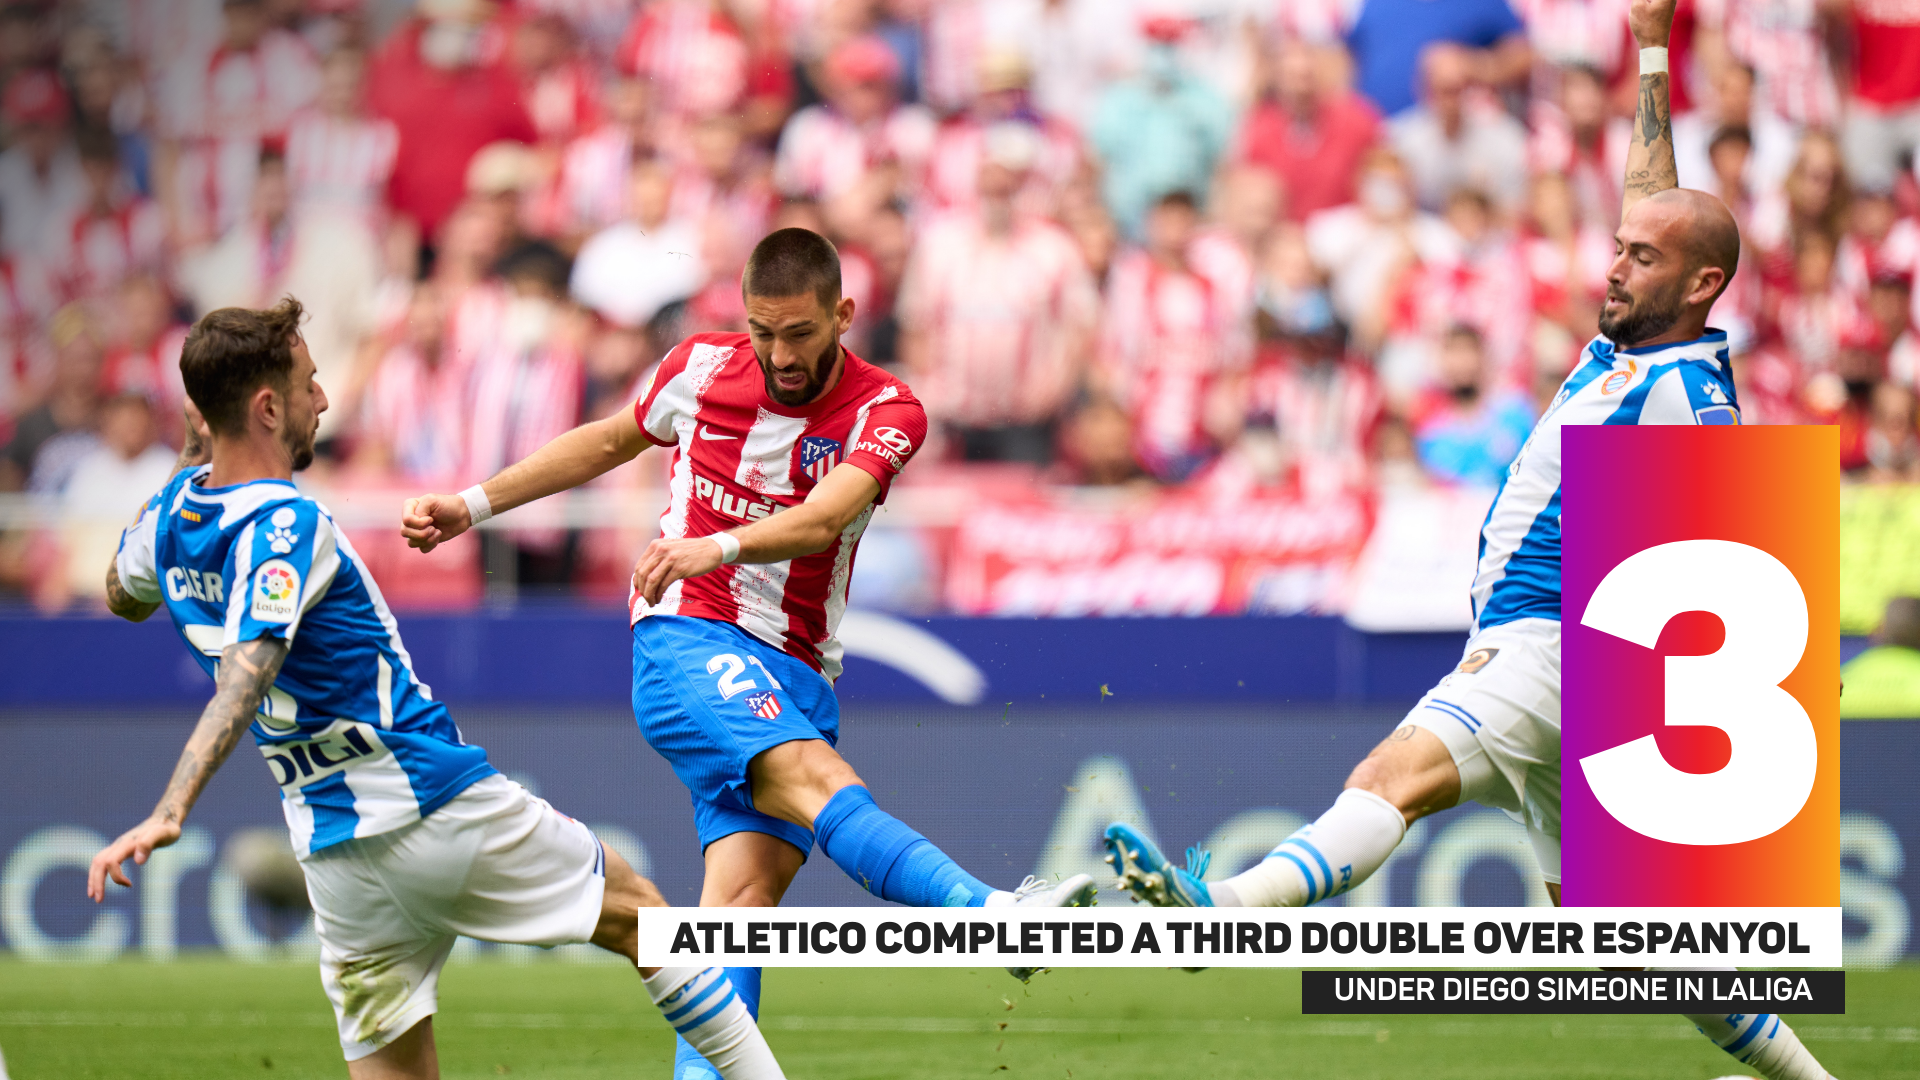 Atletico Madrid's league double over Espanyol